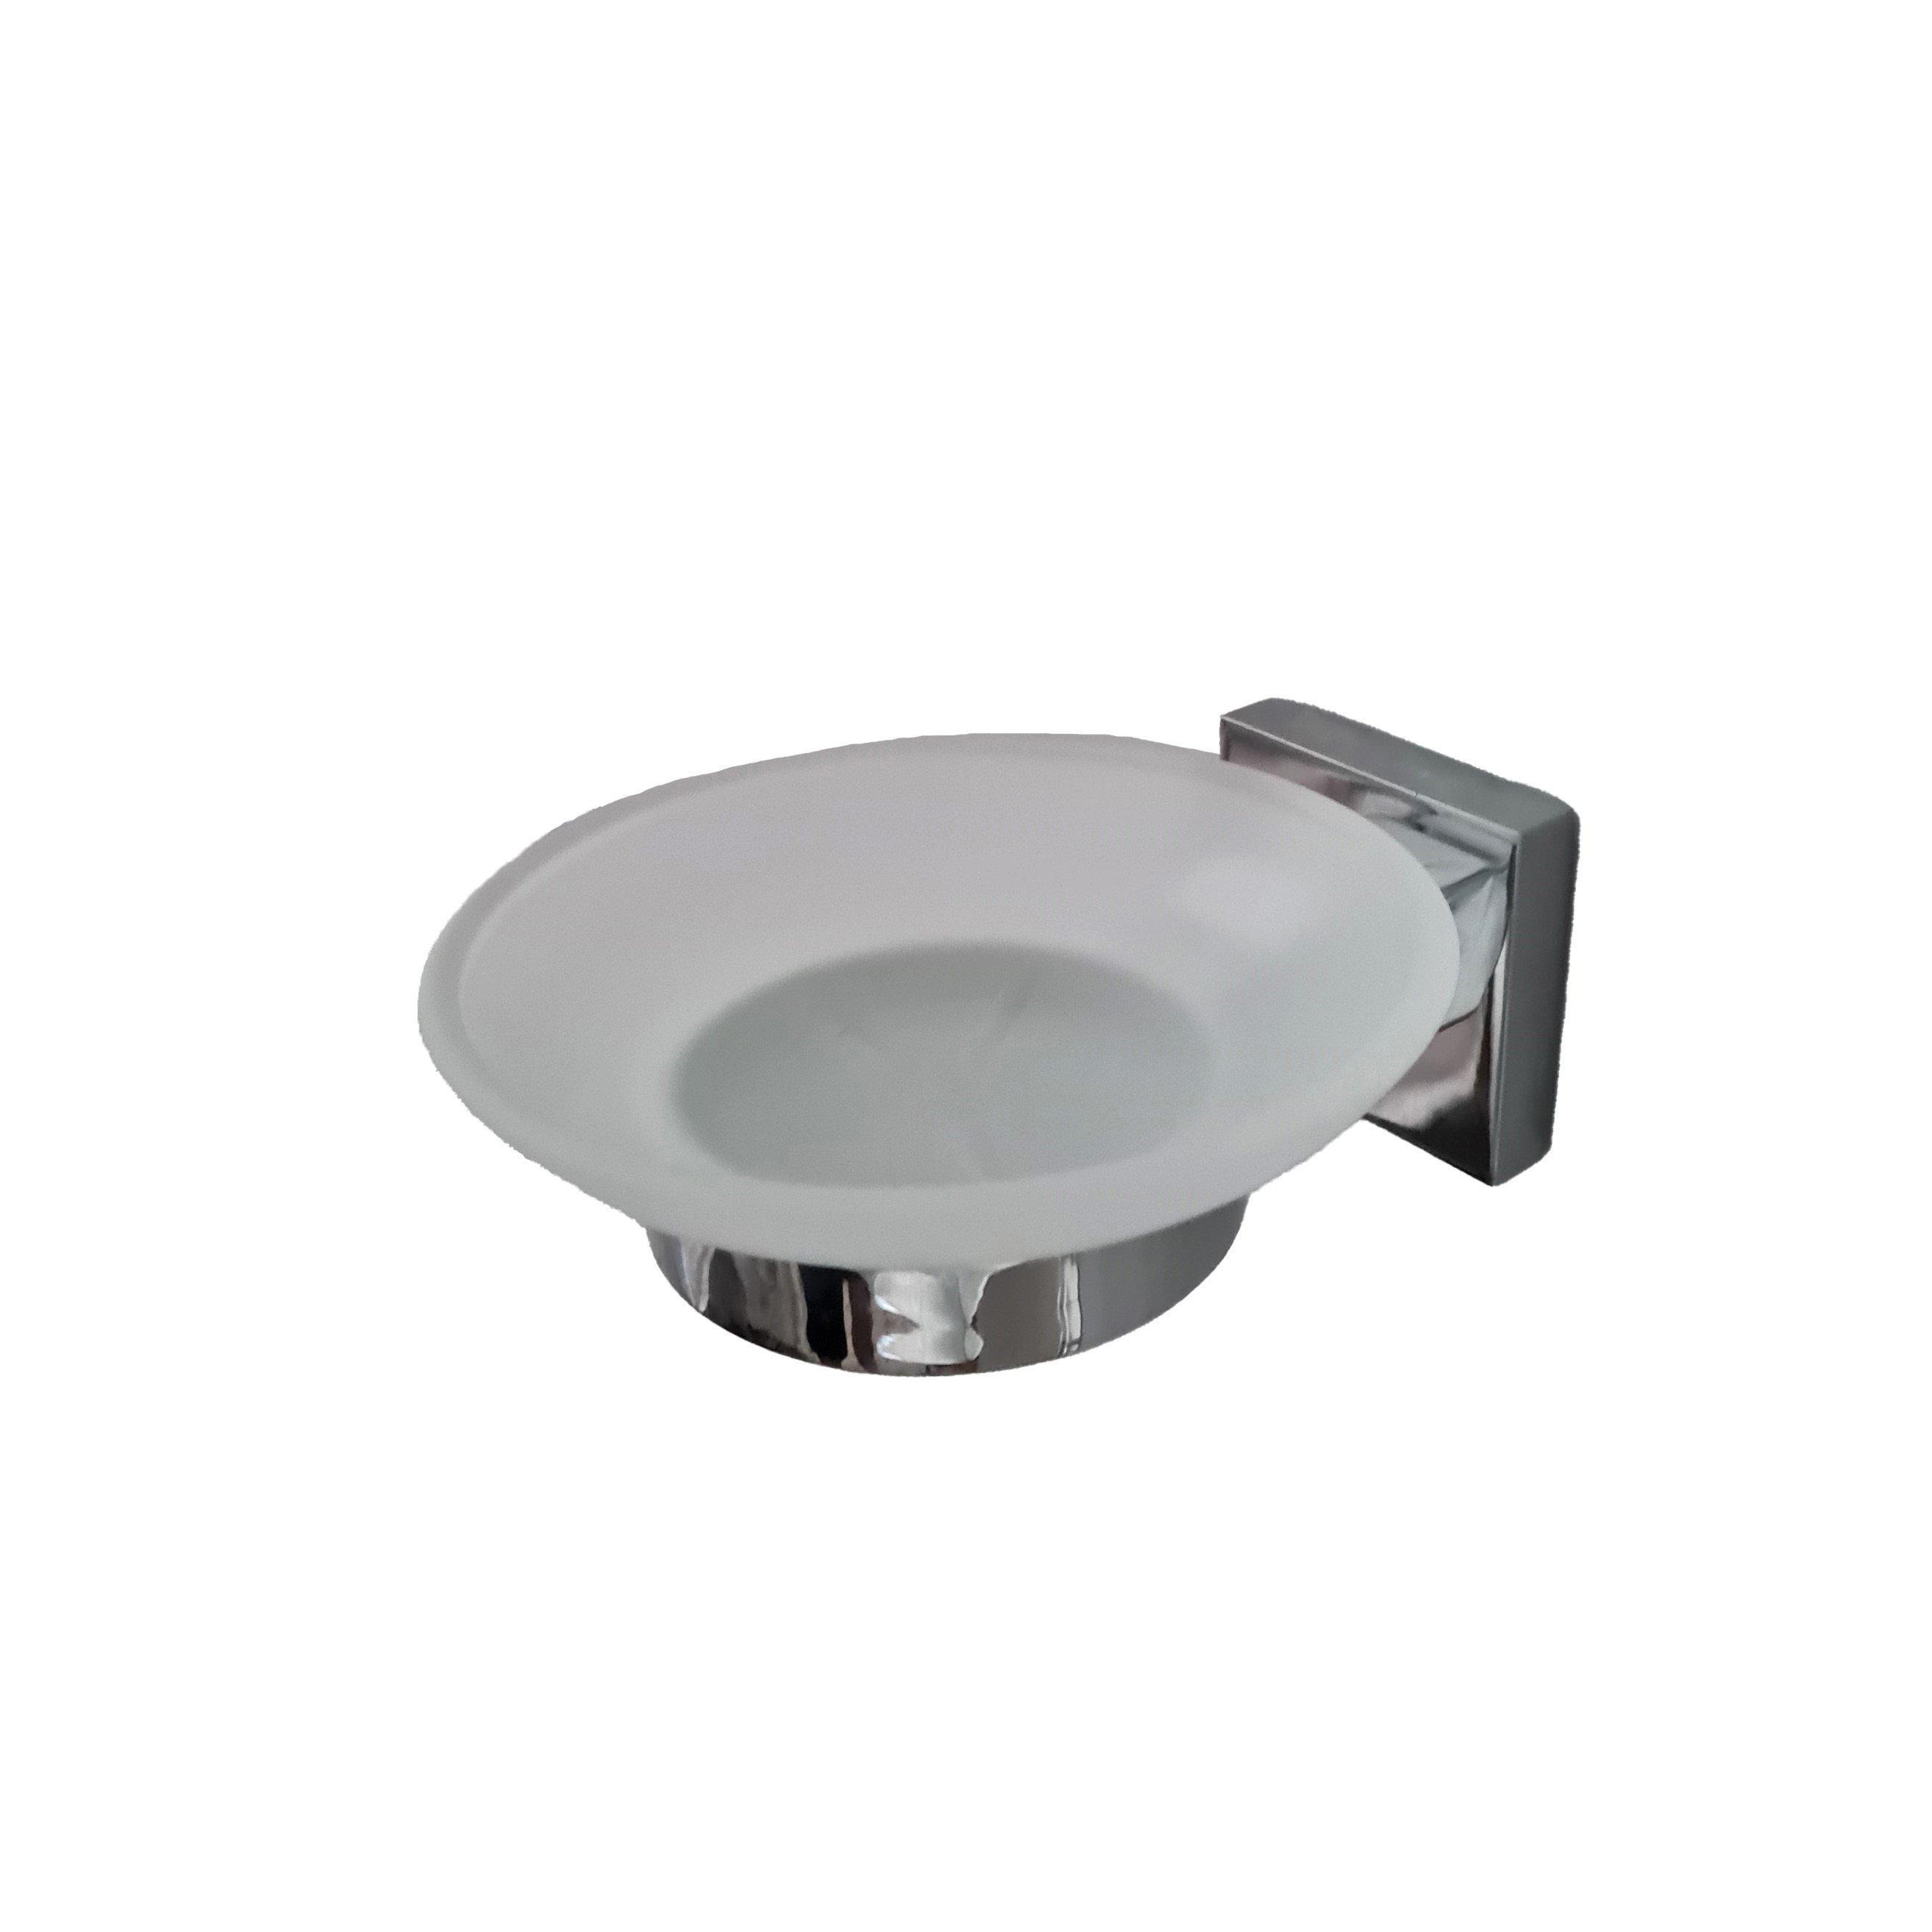 Soap Holder Chrome Glass Dish & Holder Modern Designer Bathroom Wall Mounted Accessory - image 1